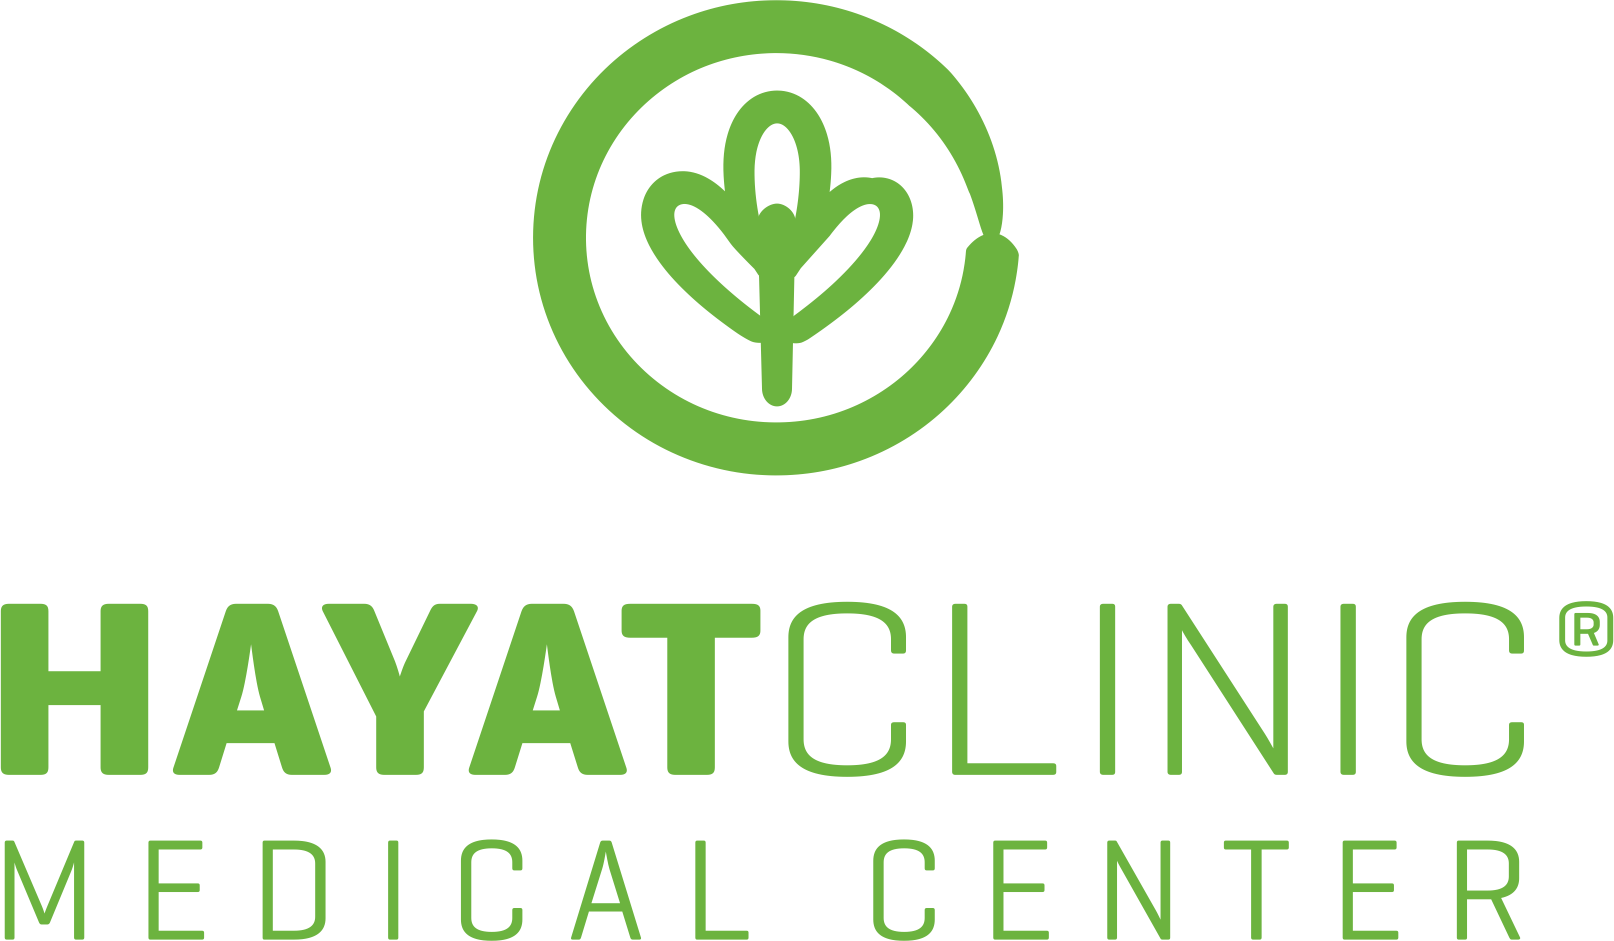 HAYAT Clinic